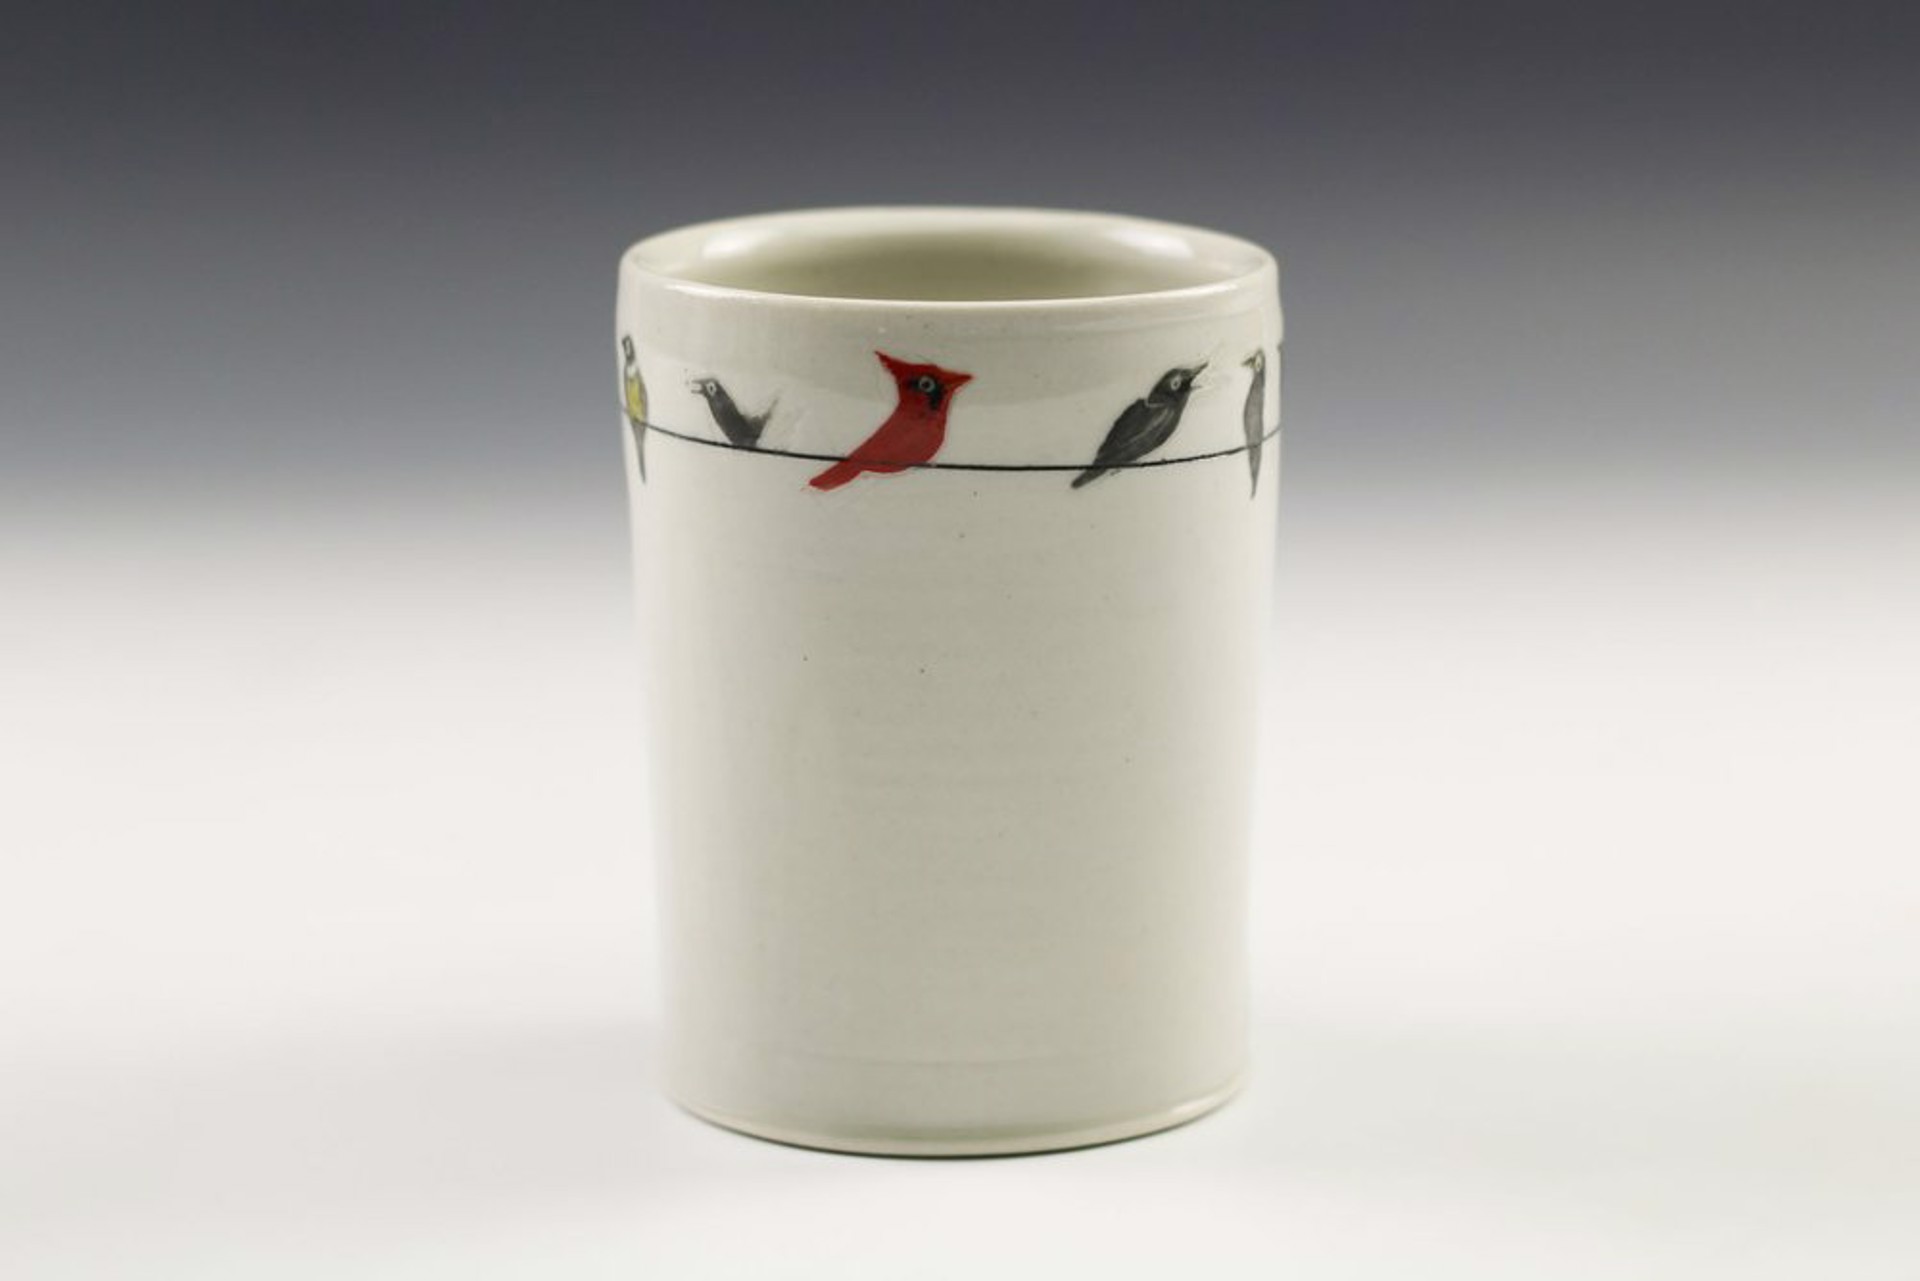 Birds on a Wire Mug by Glynnis Lessing